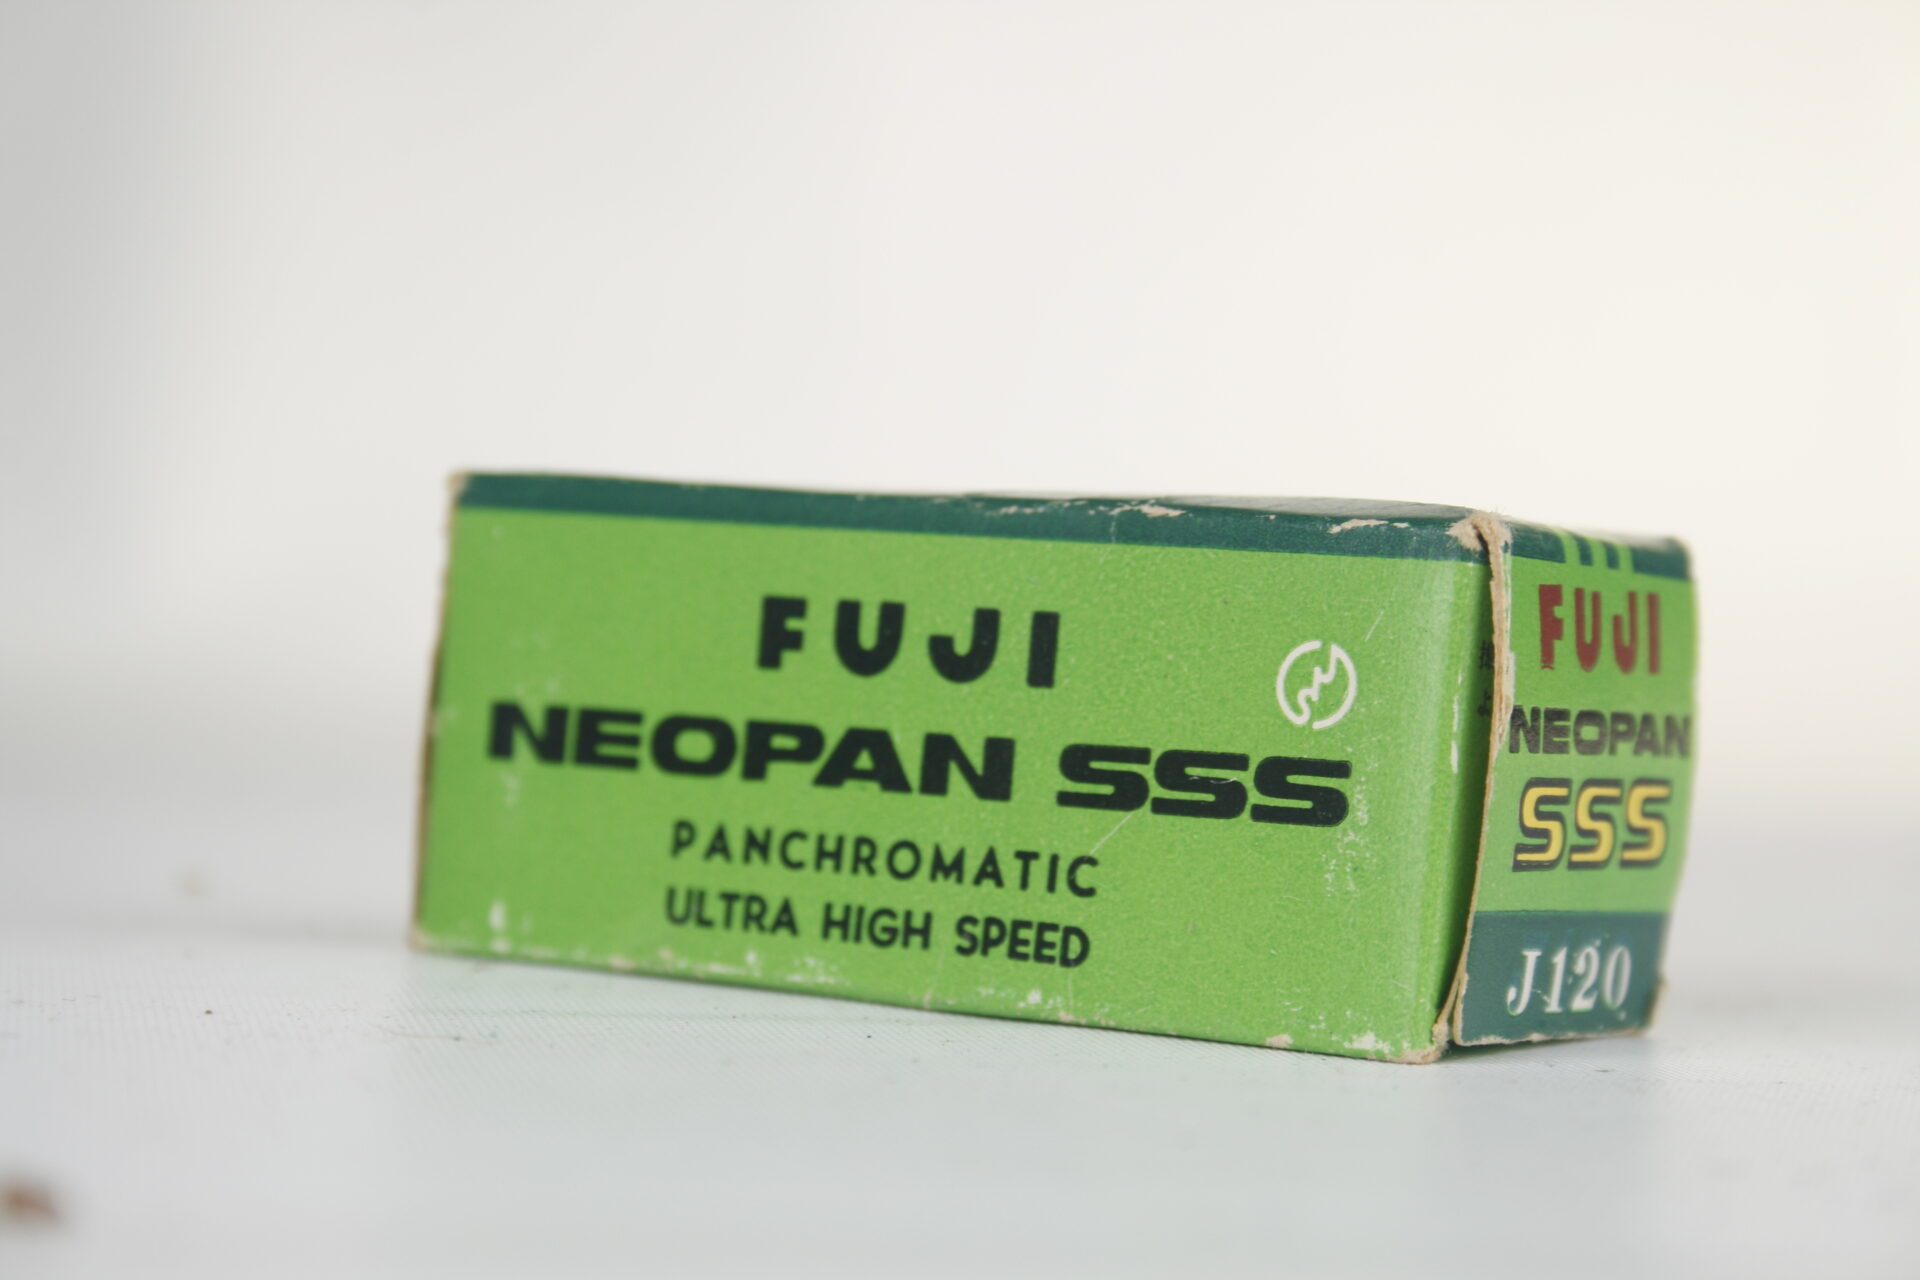 Fuji Neopan SSS. Panchromatisch ultra hoge snelheid.